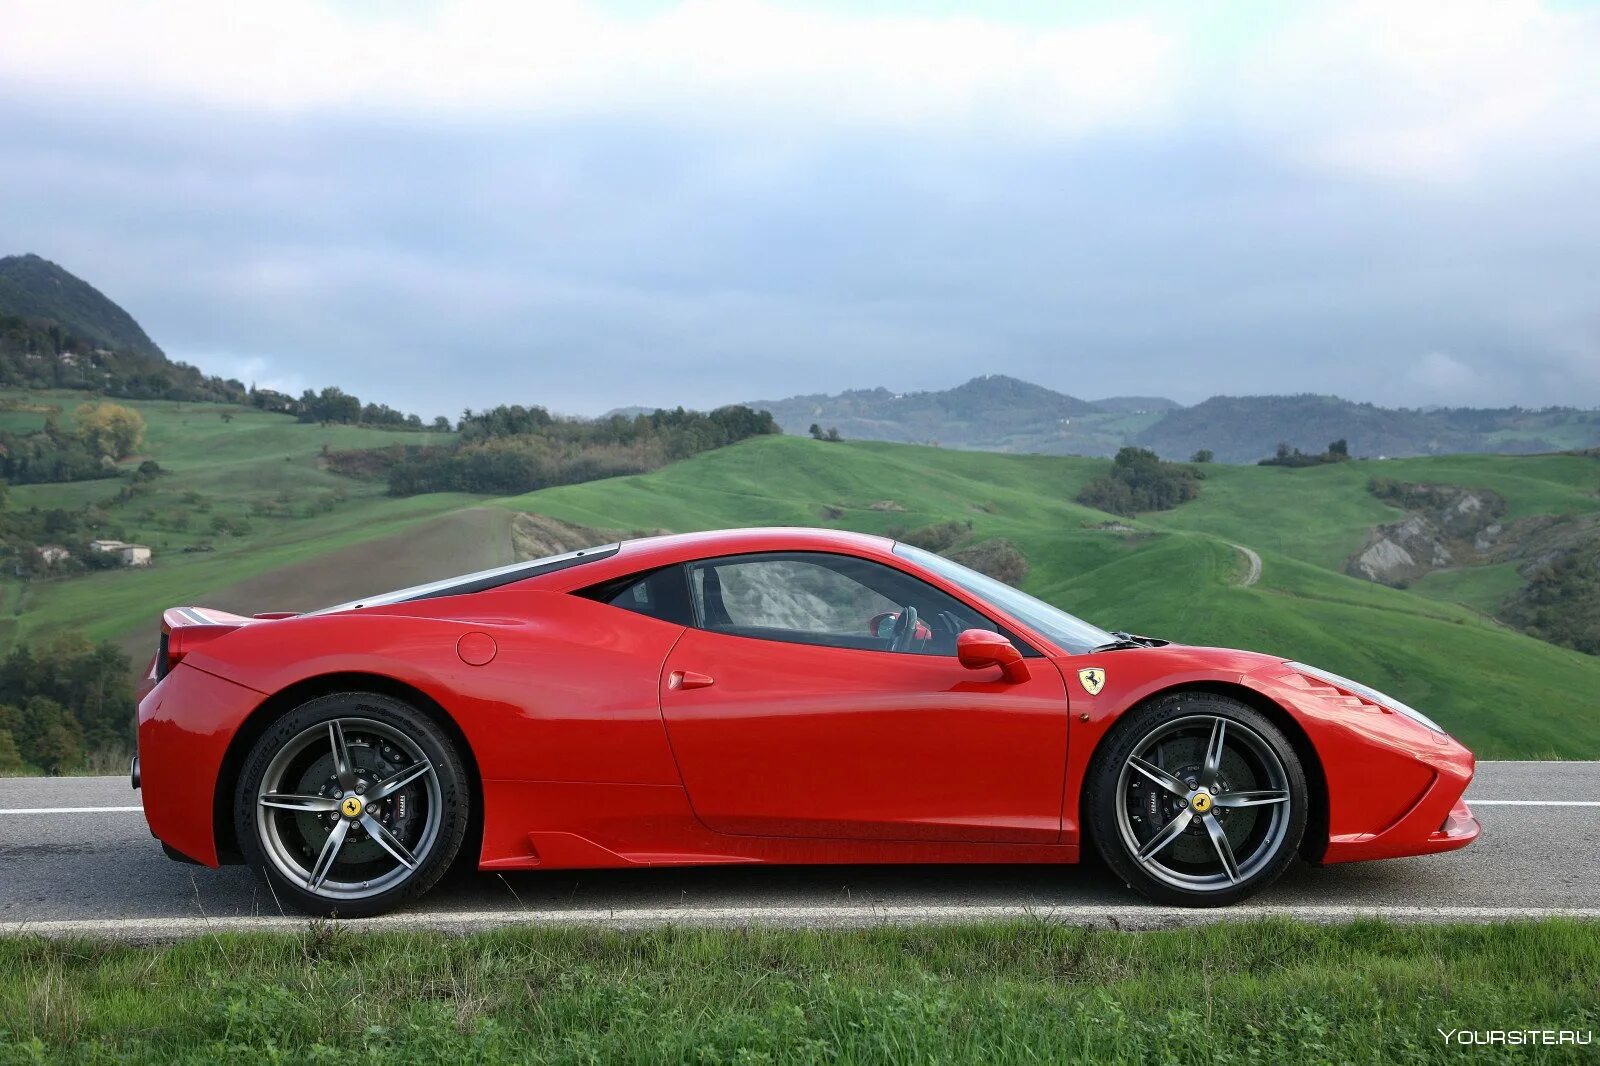 Ferrari 458. Феррари 458 Специале. Автомобиль Ferrari 458 Italia. Ferrari 458 speciale Red New. Ferrari t80